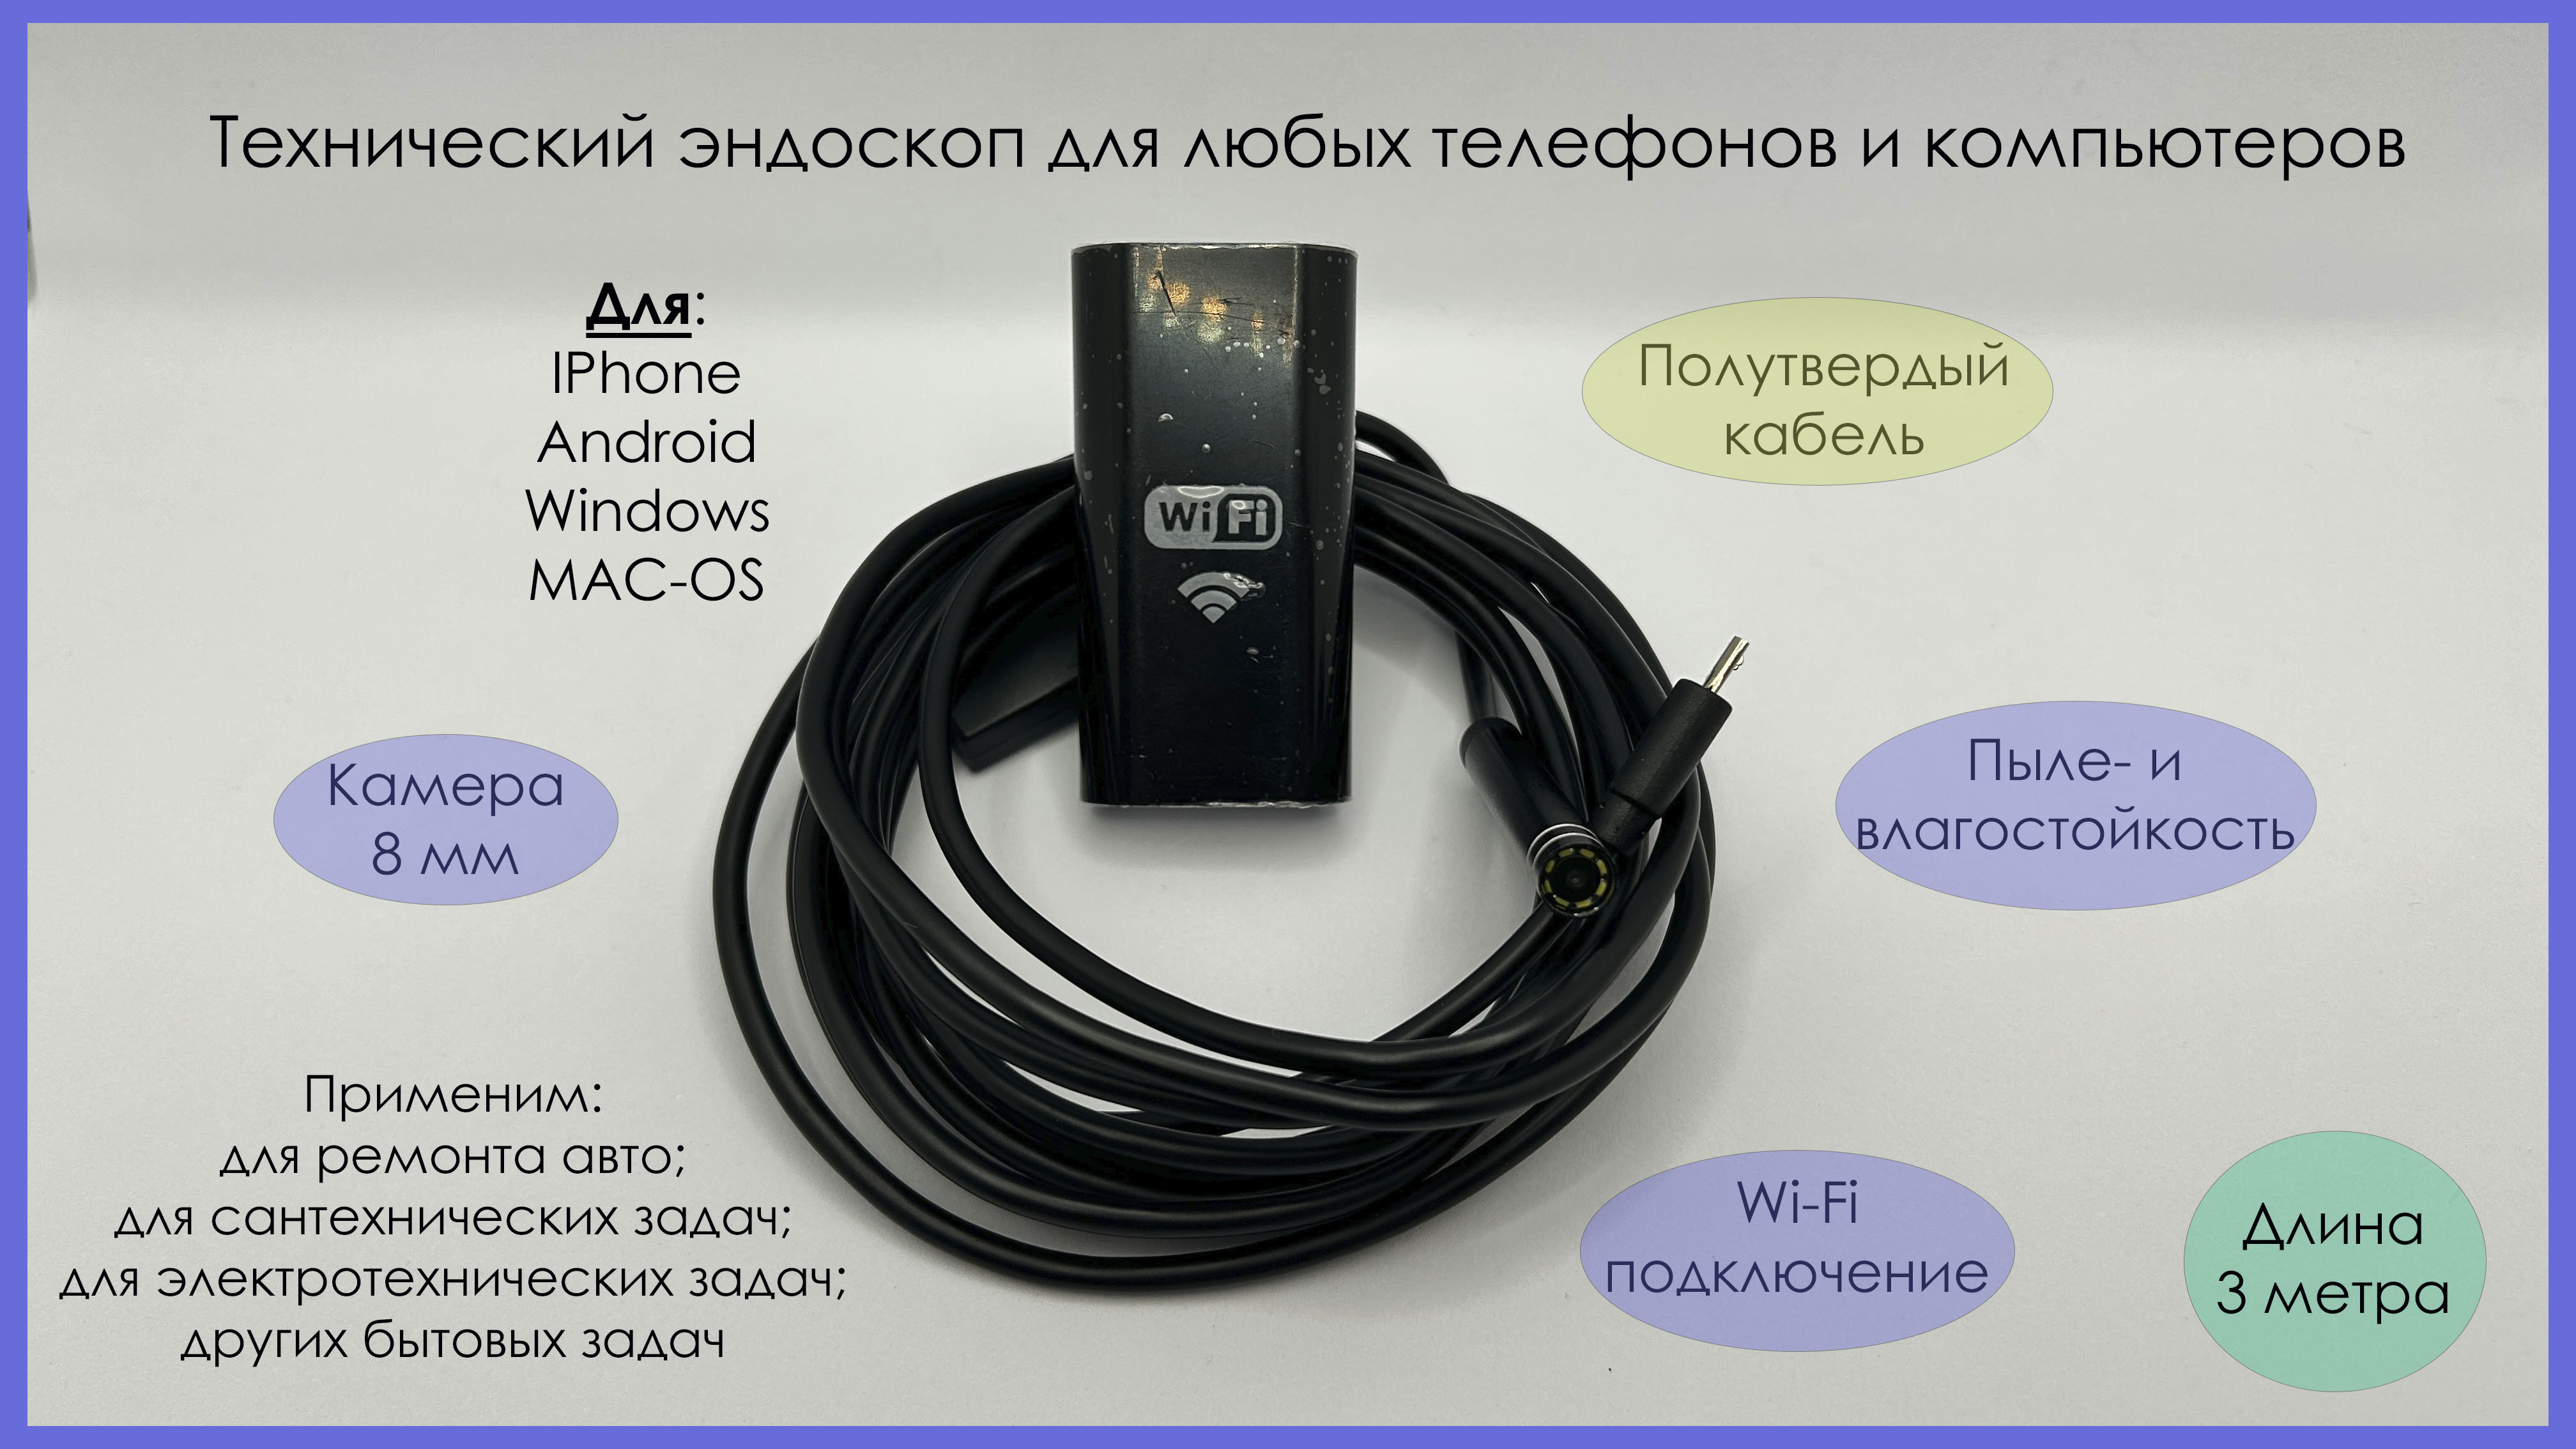 Эндоскоп технический (wi-fi) для смартфонов, 3 метра, кам. 8мм эндоскоп ypc99 5 hd720p для любых смартфонов 8 мм длина 5 м полутвердый провод